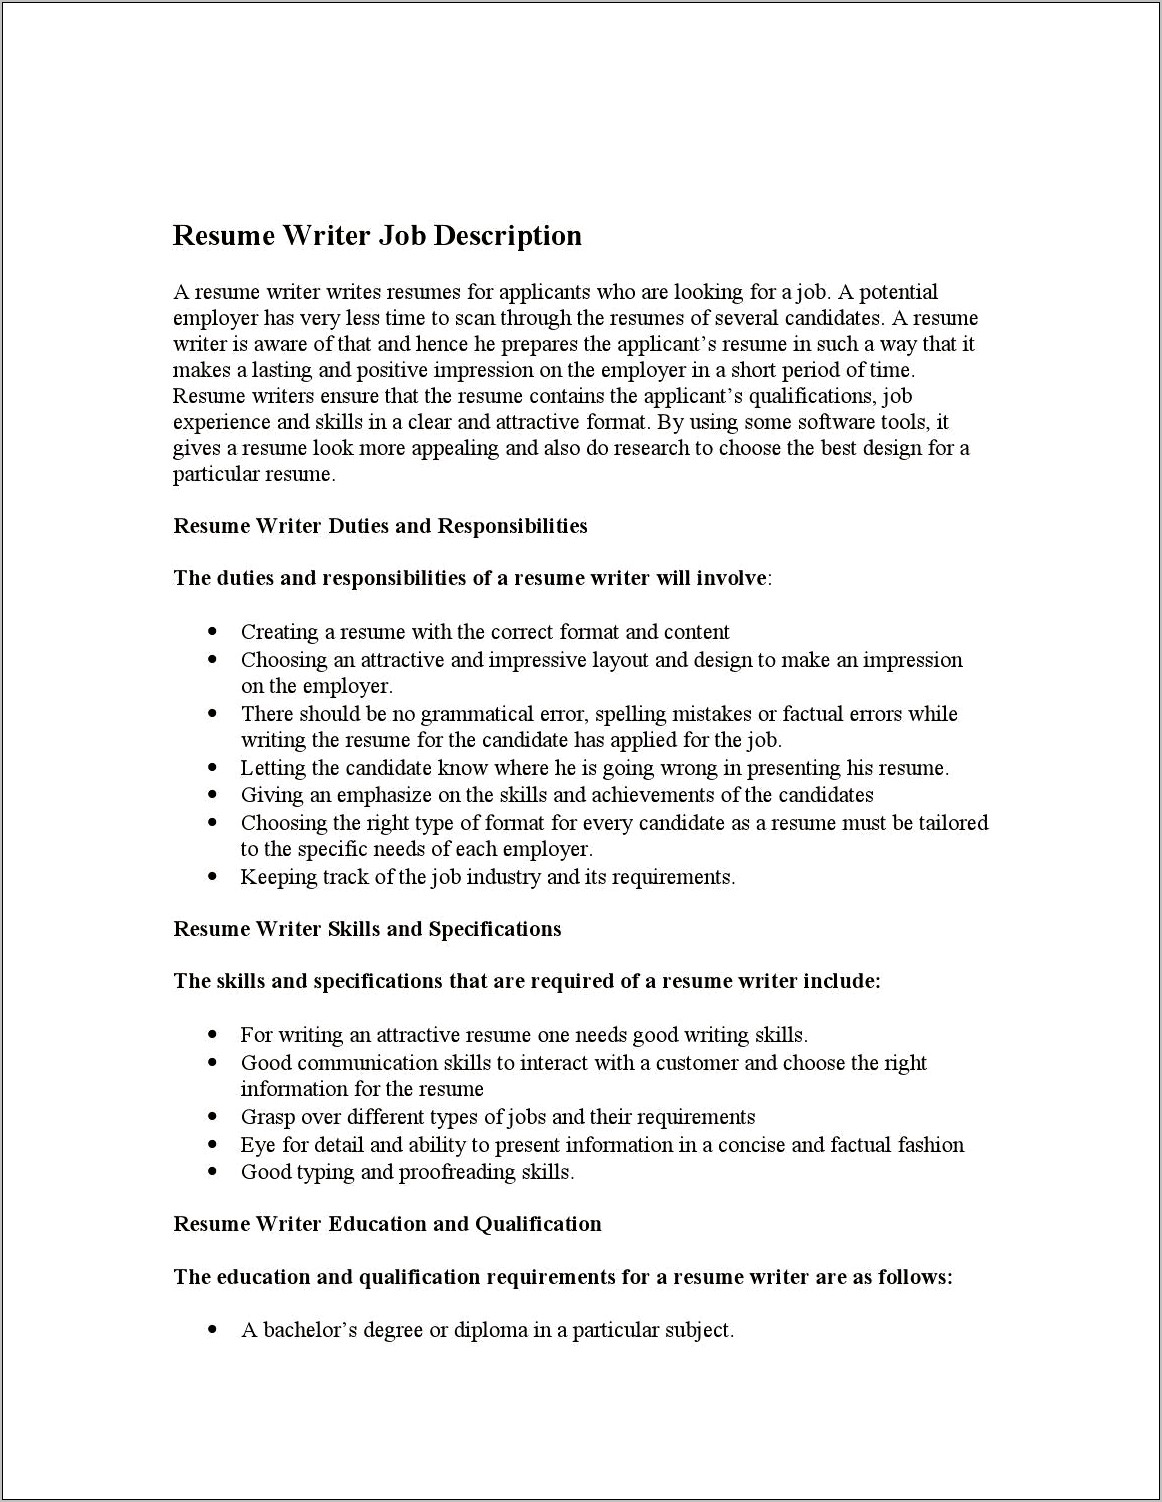 Job Description Of Resume Writer